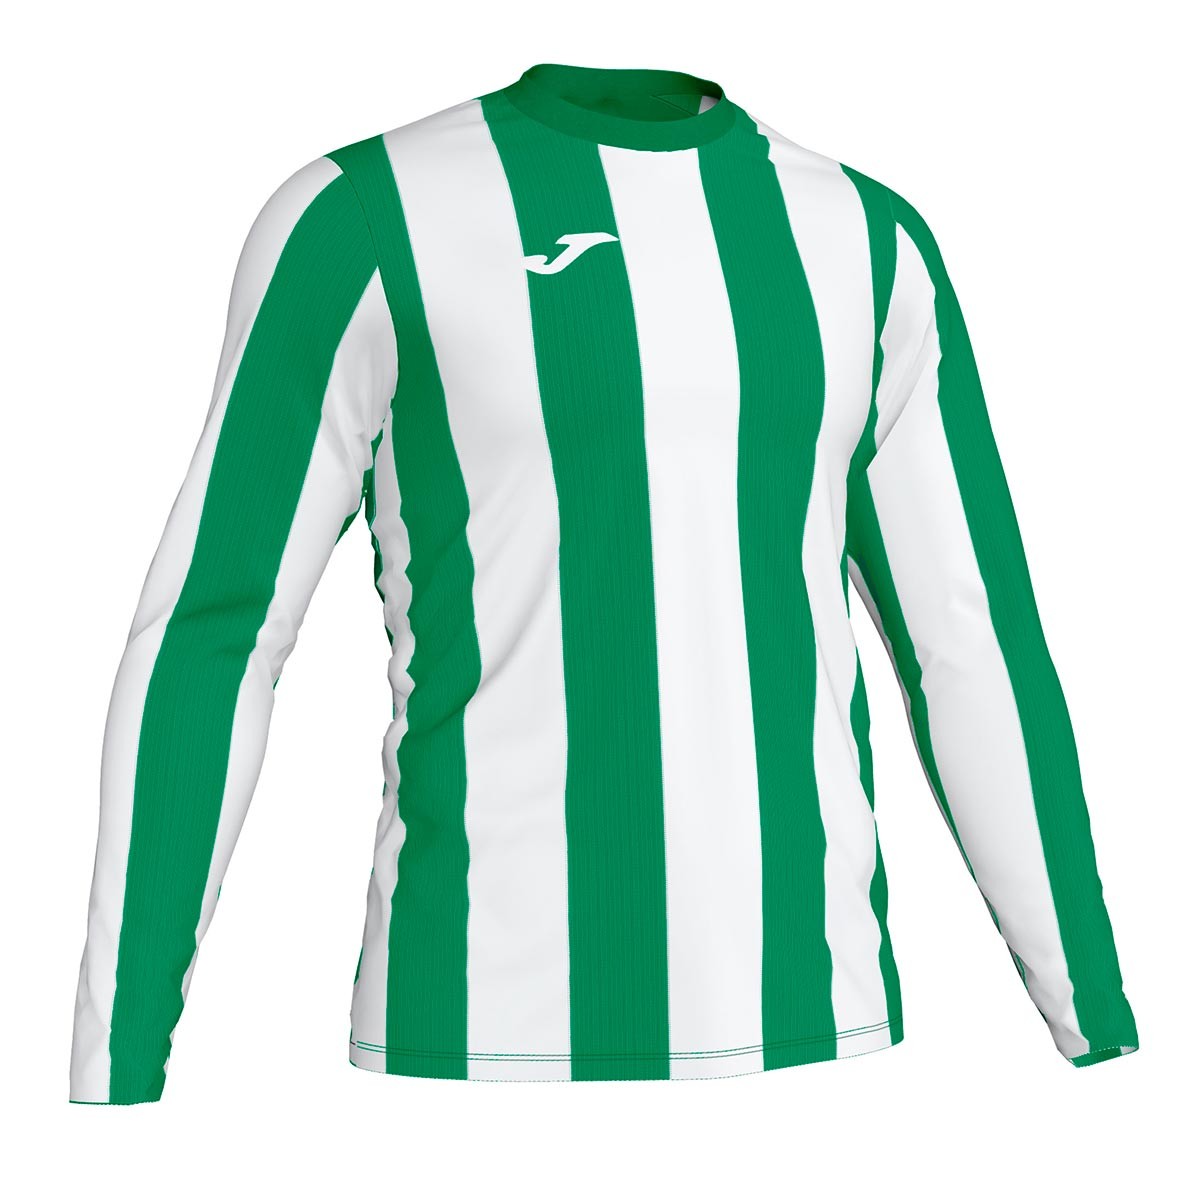 Jersey Joma Inter m/l Green-White 